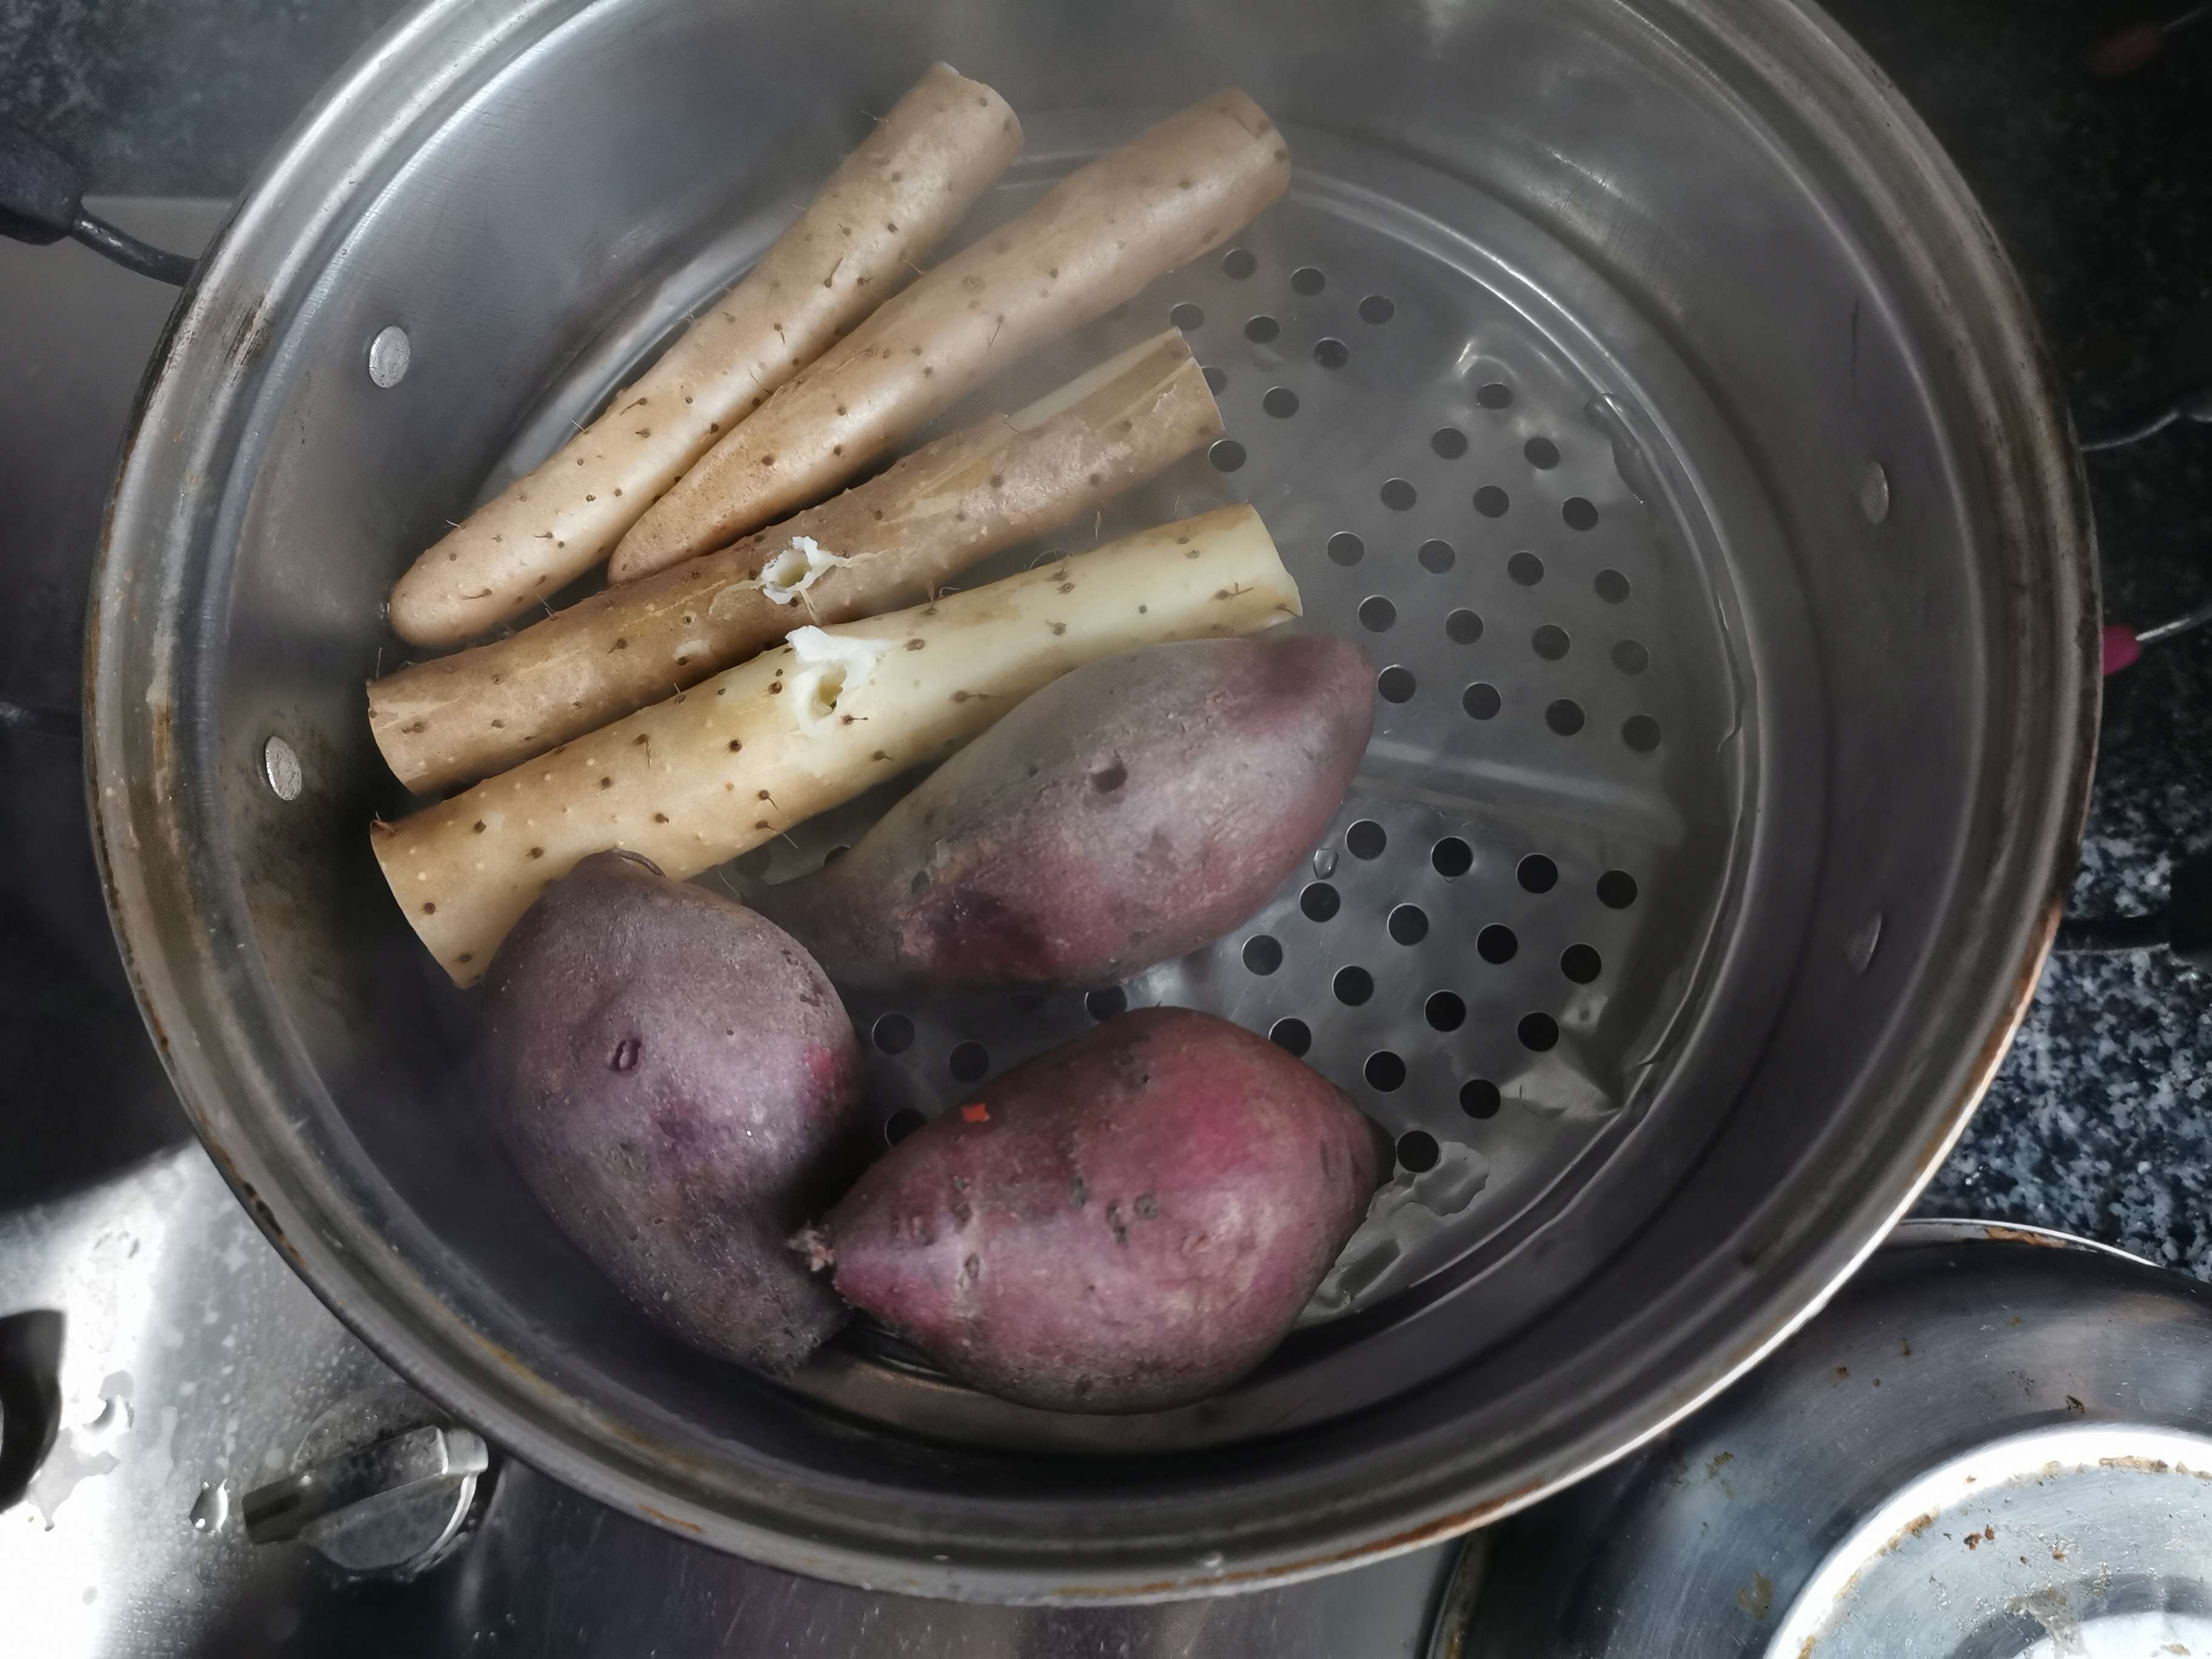 Crystal Yam and Purple Sweet Potato Dumplings recipe